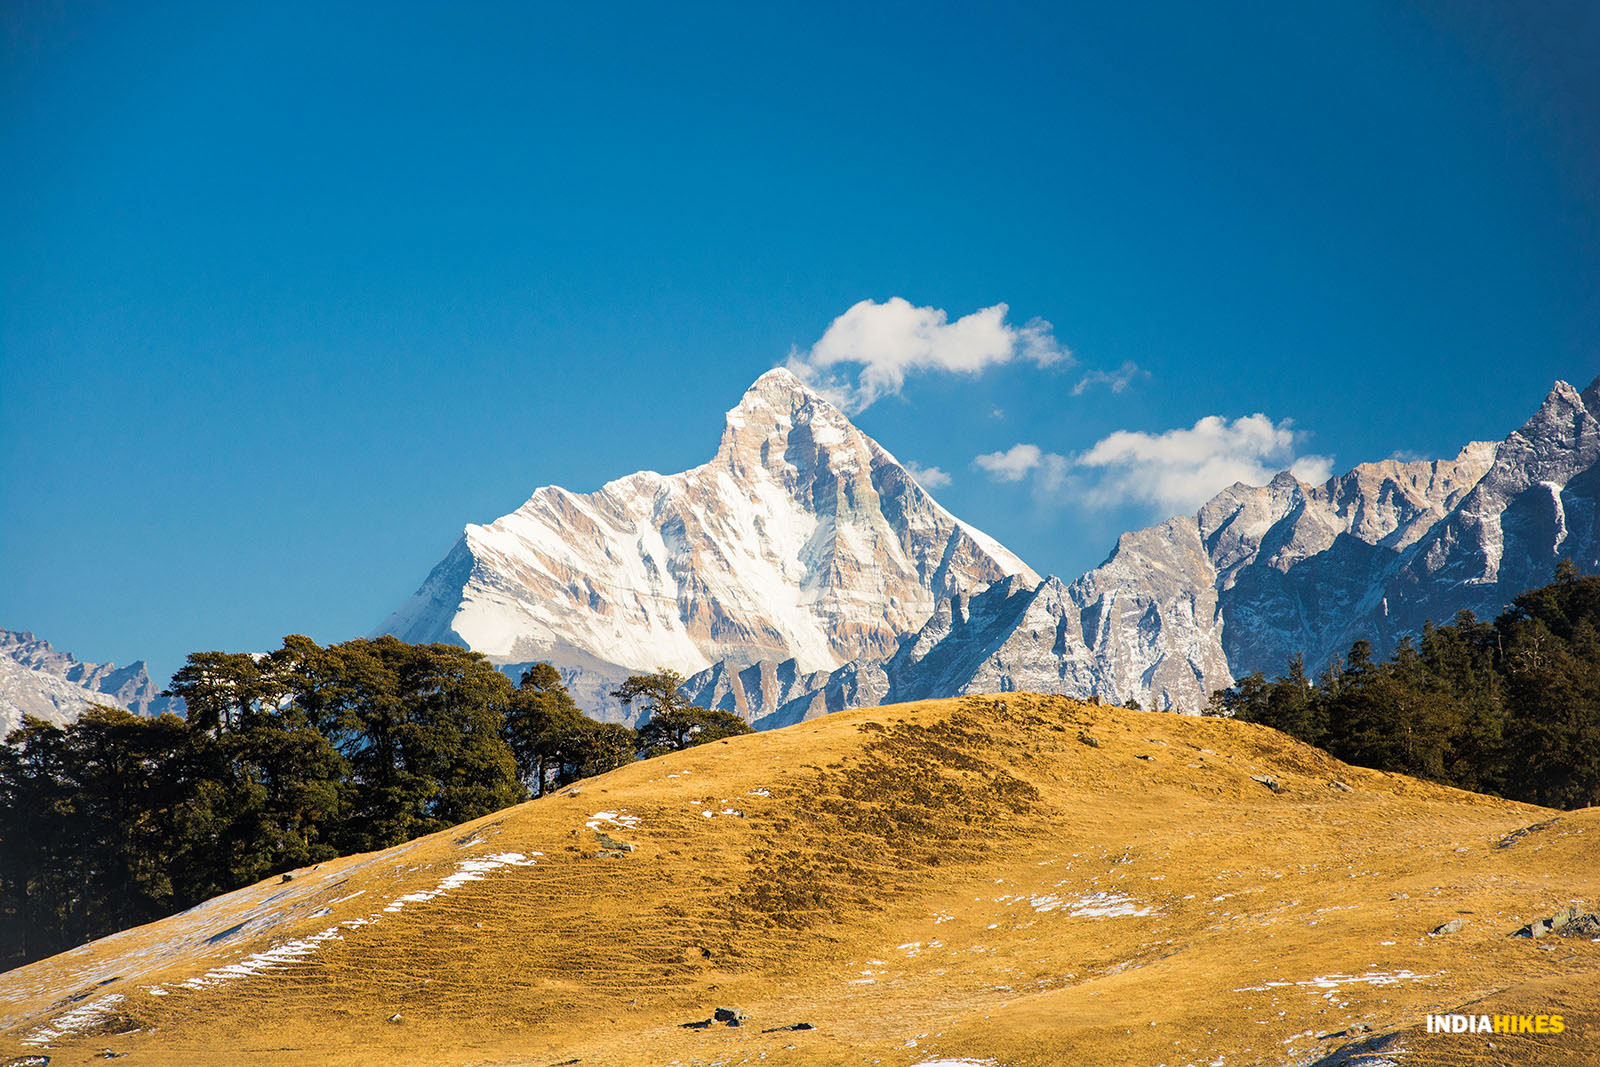 Trekking with the best views of Nanda Devi